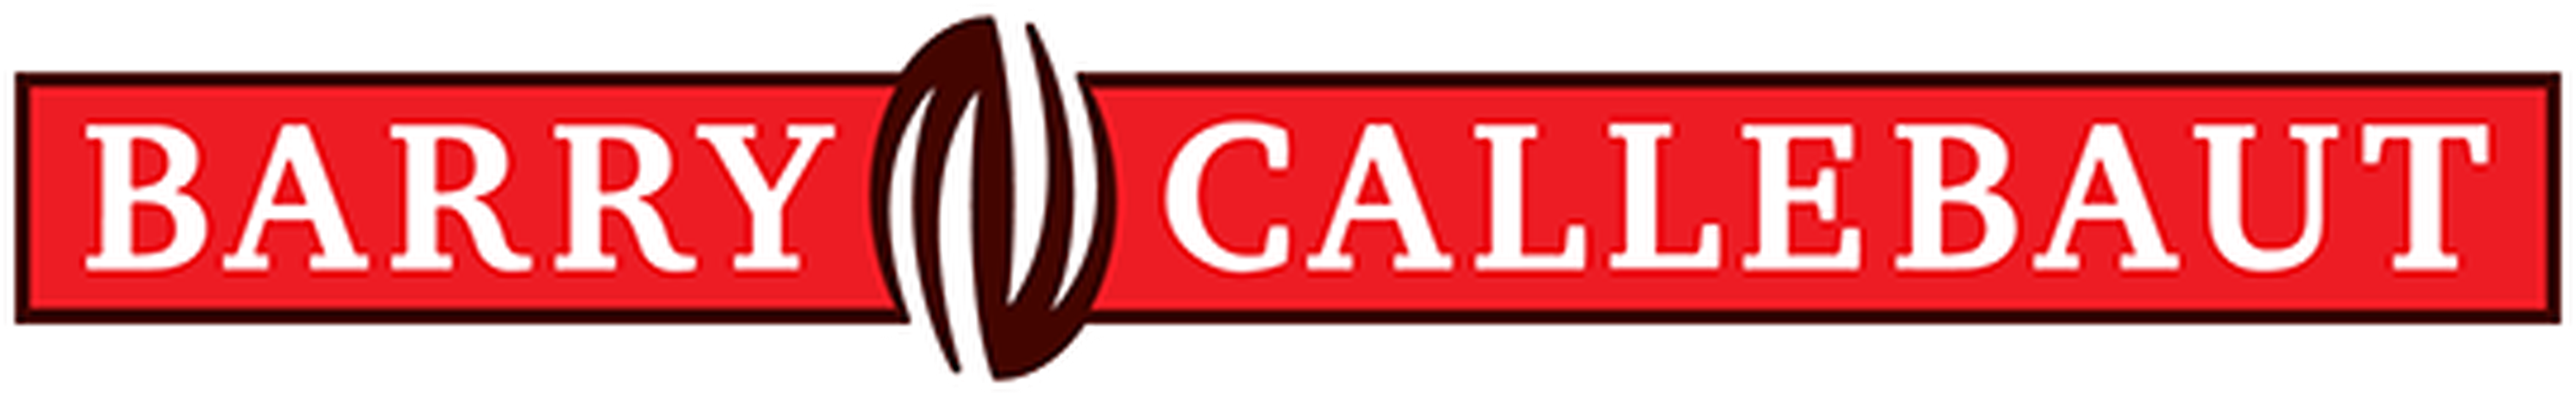 Barry Callebaut Brand Logo